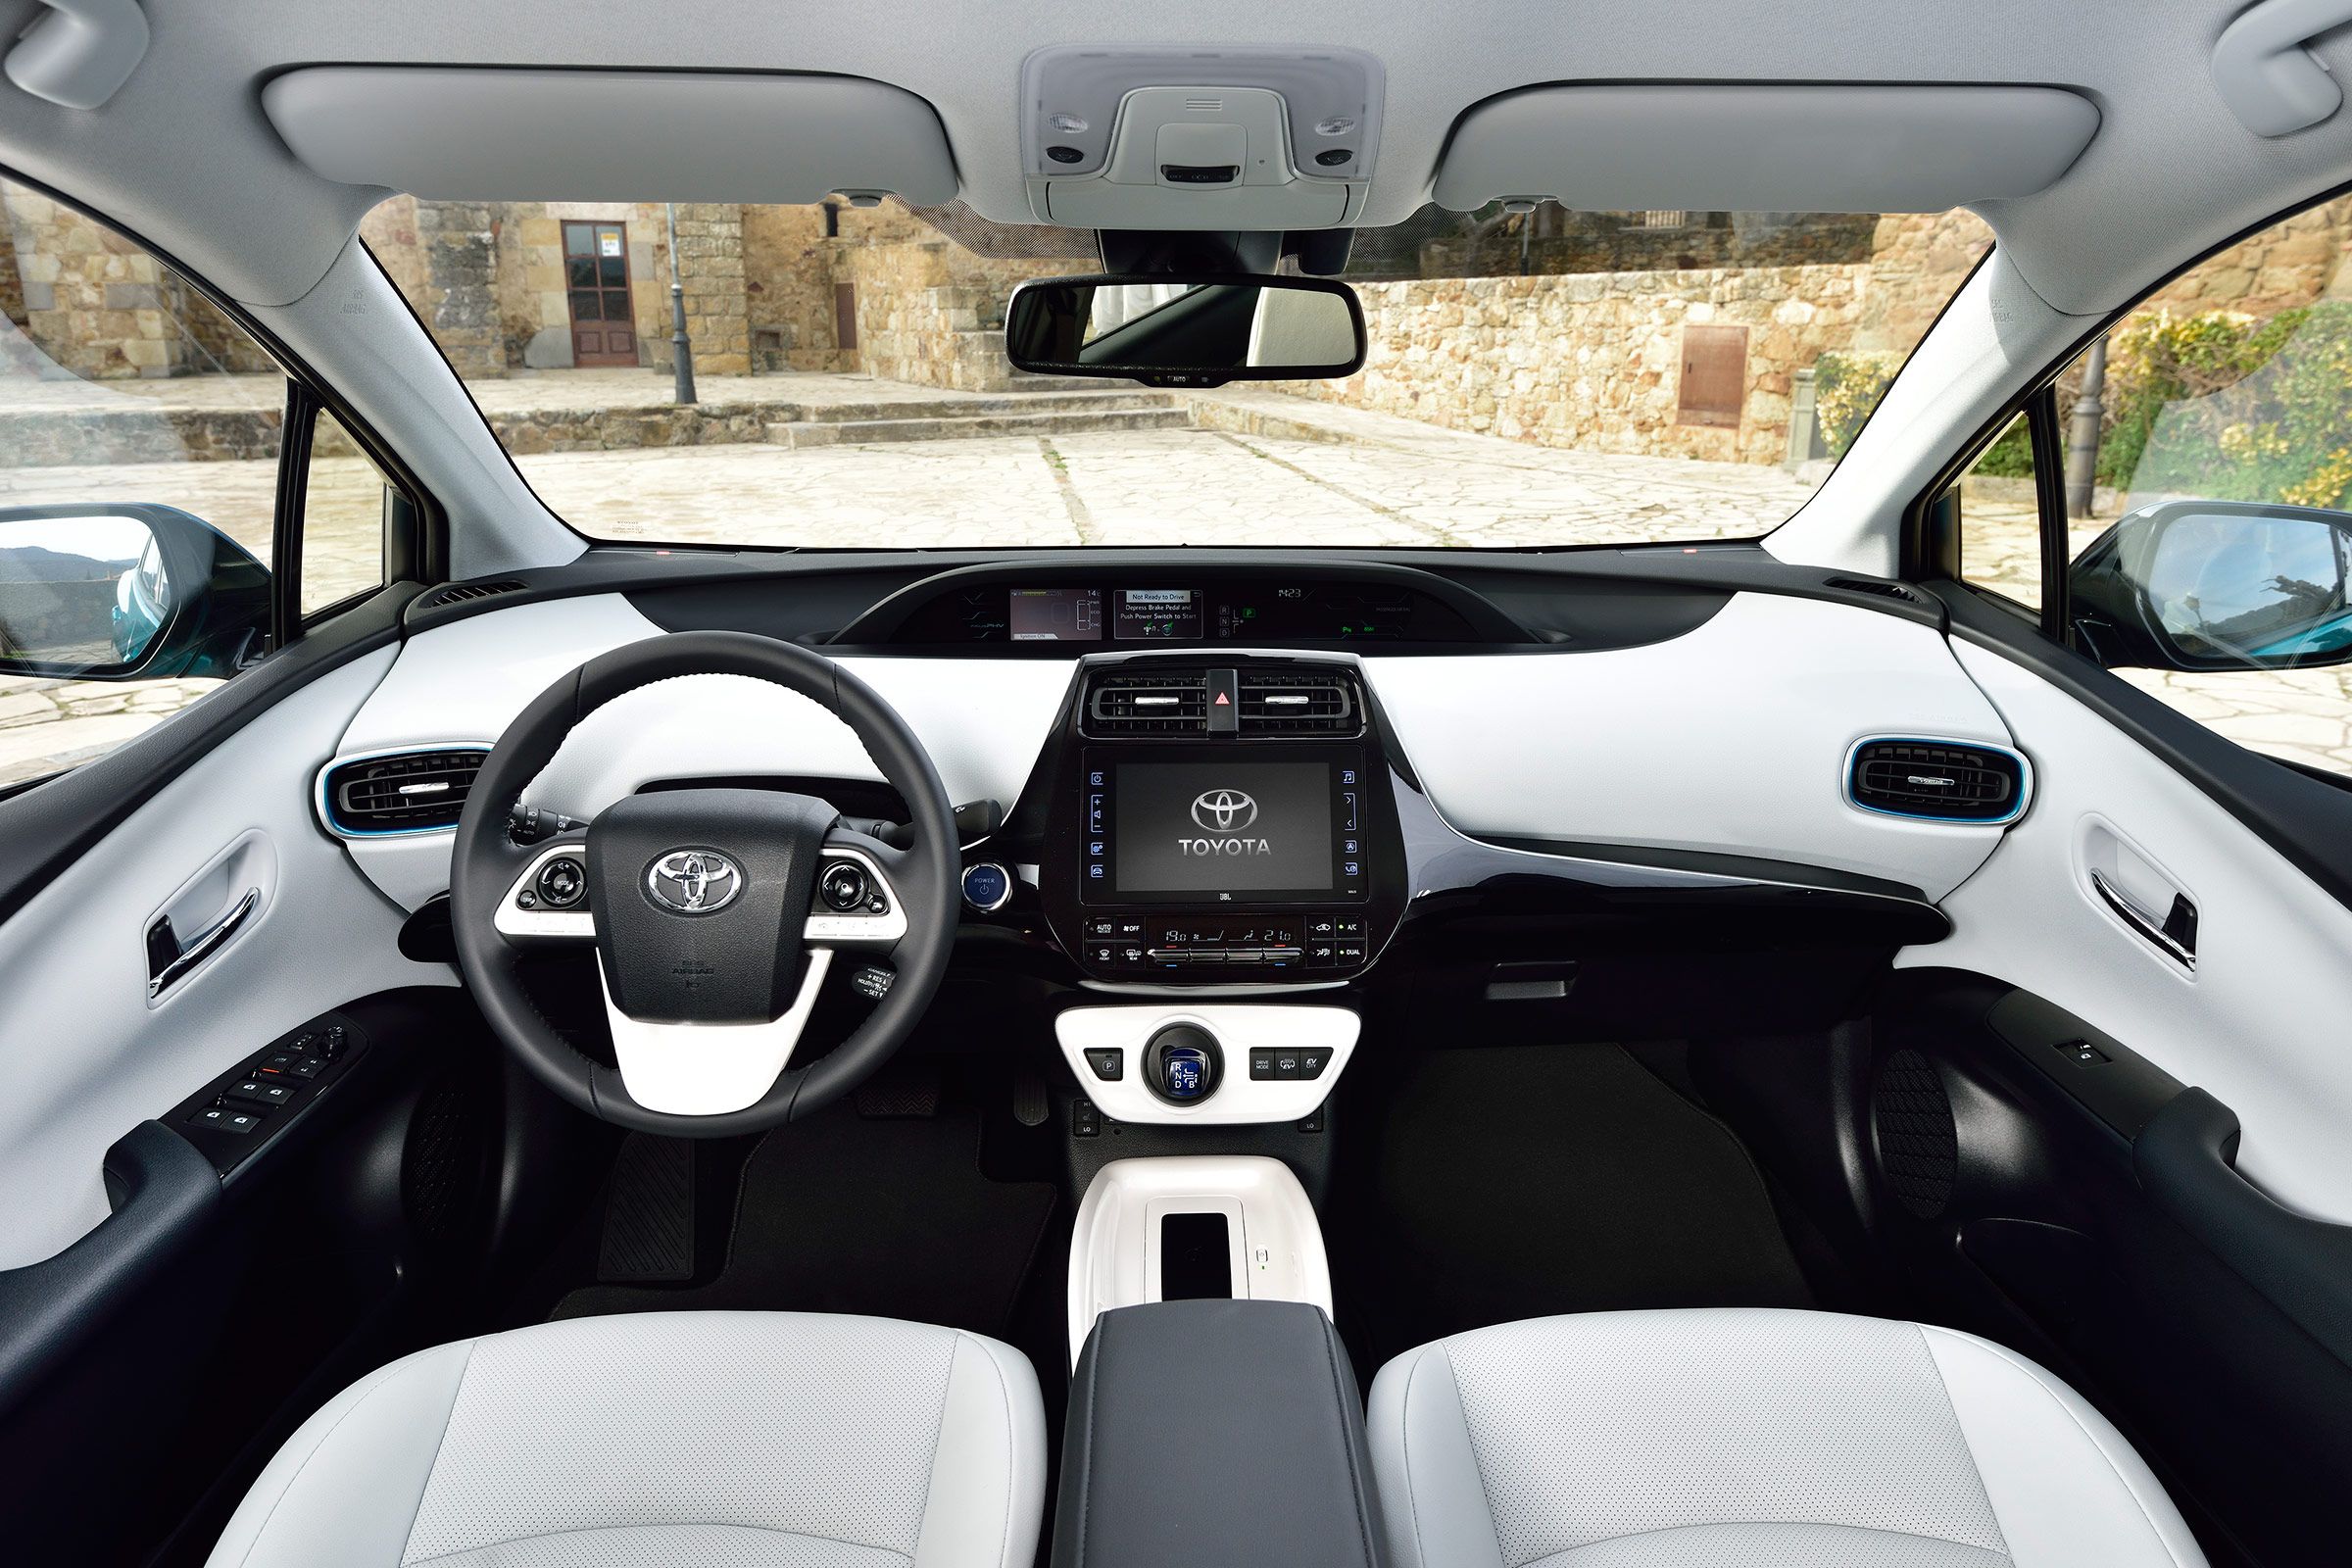 2017 Toyota Prius Interior Dashboard (View 54 of 64)